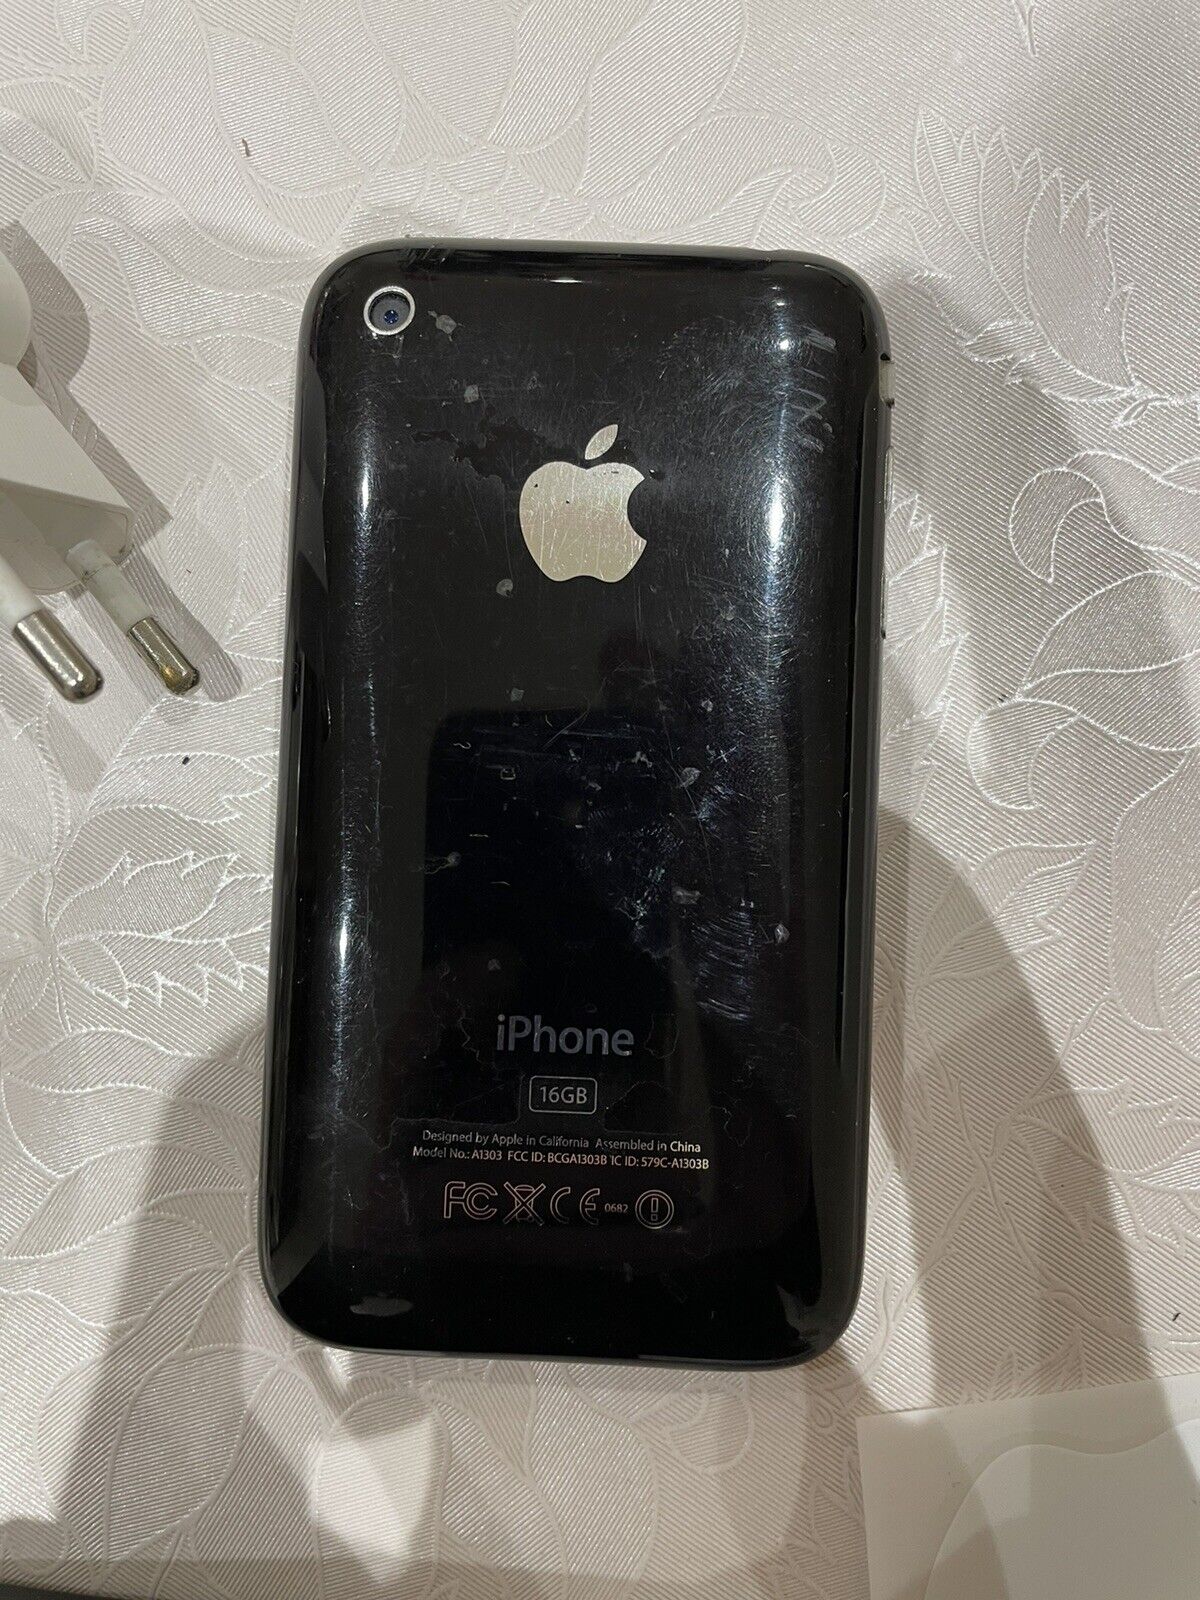 Apple iPhone 3GS 16gb white boxed sim locked